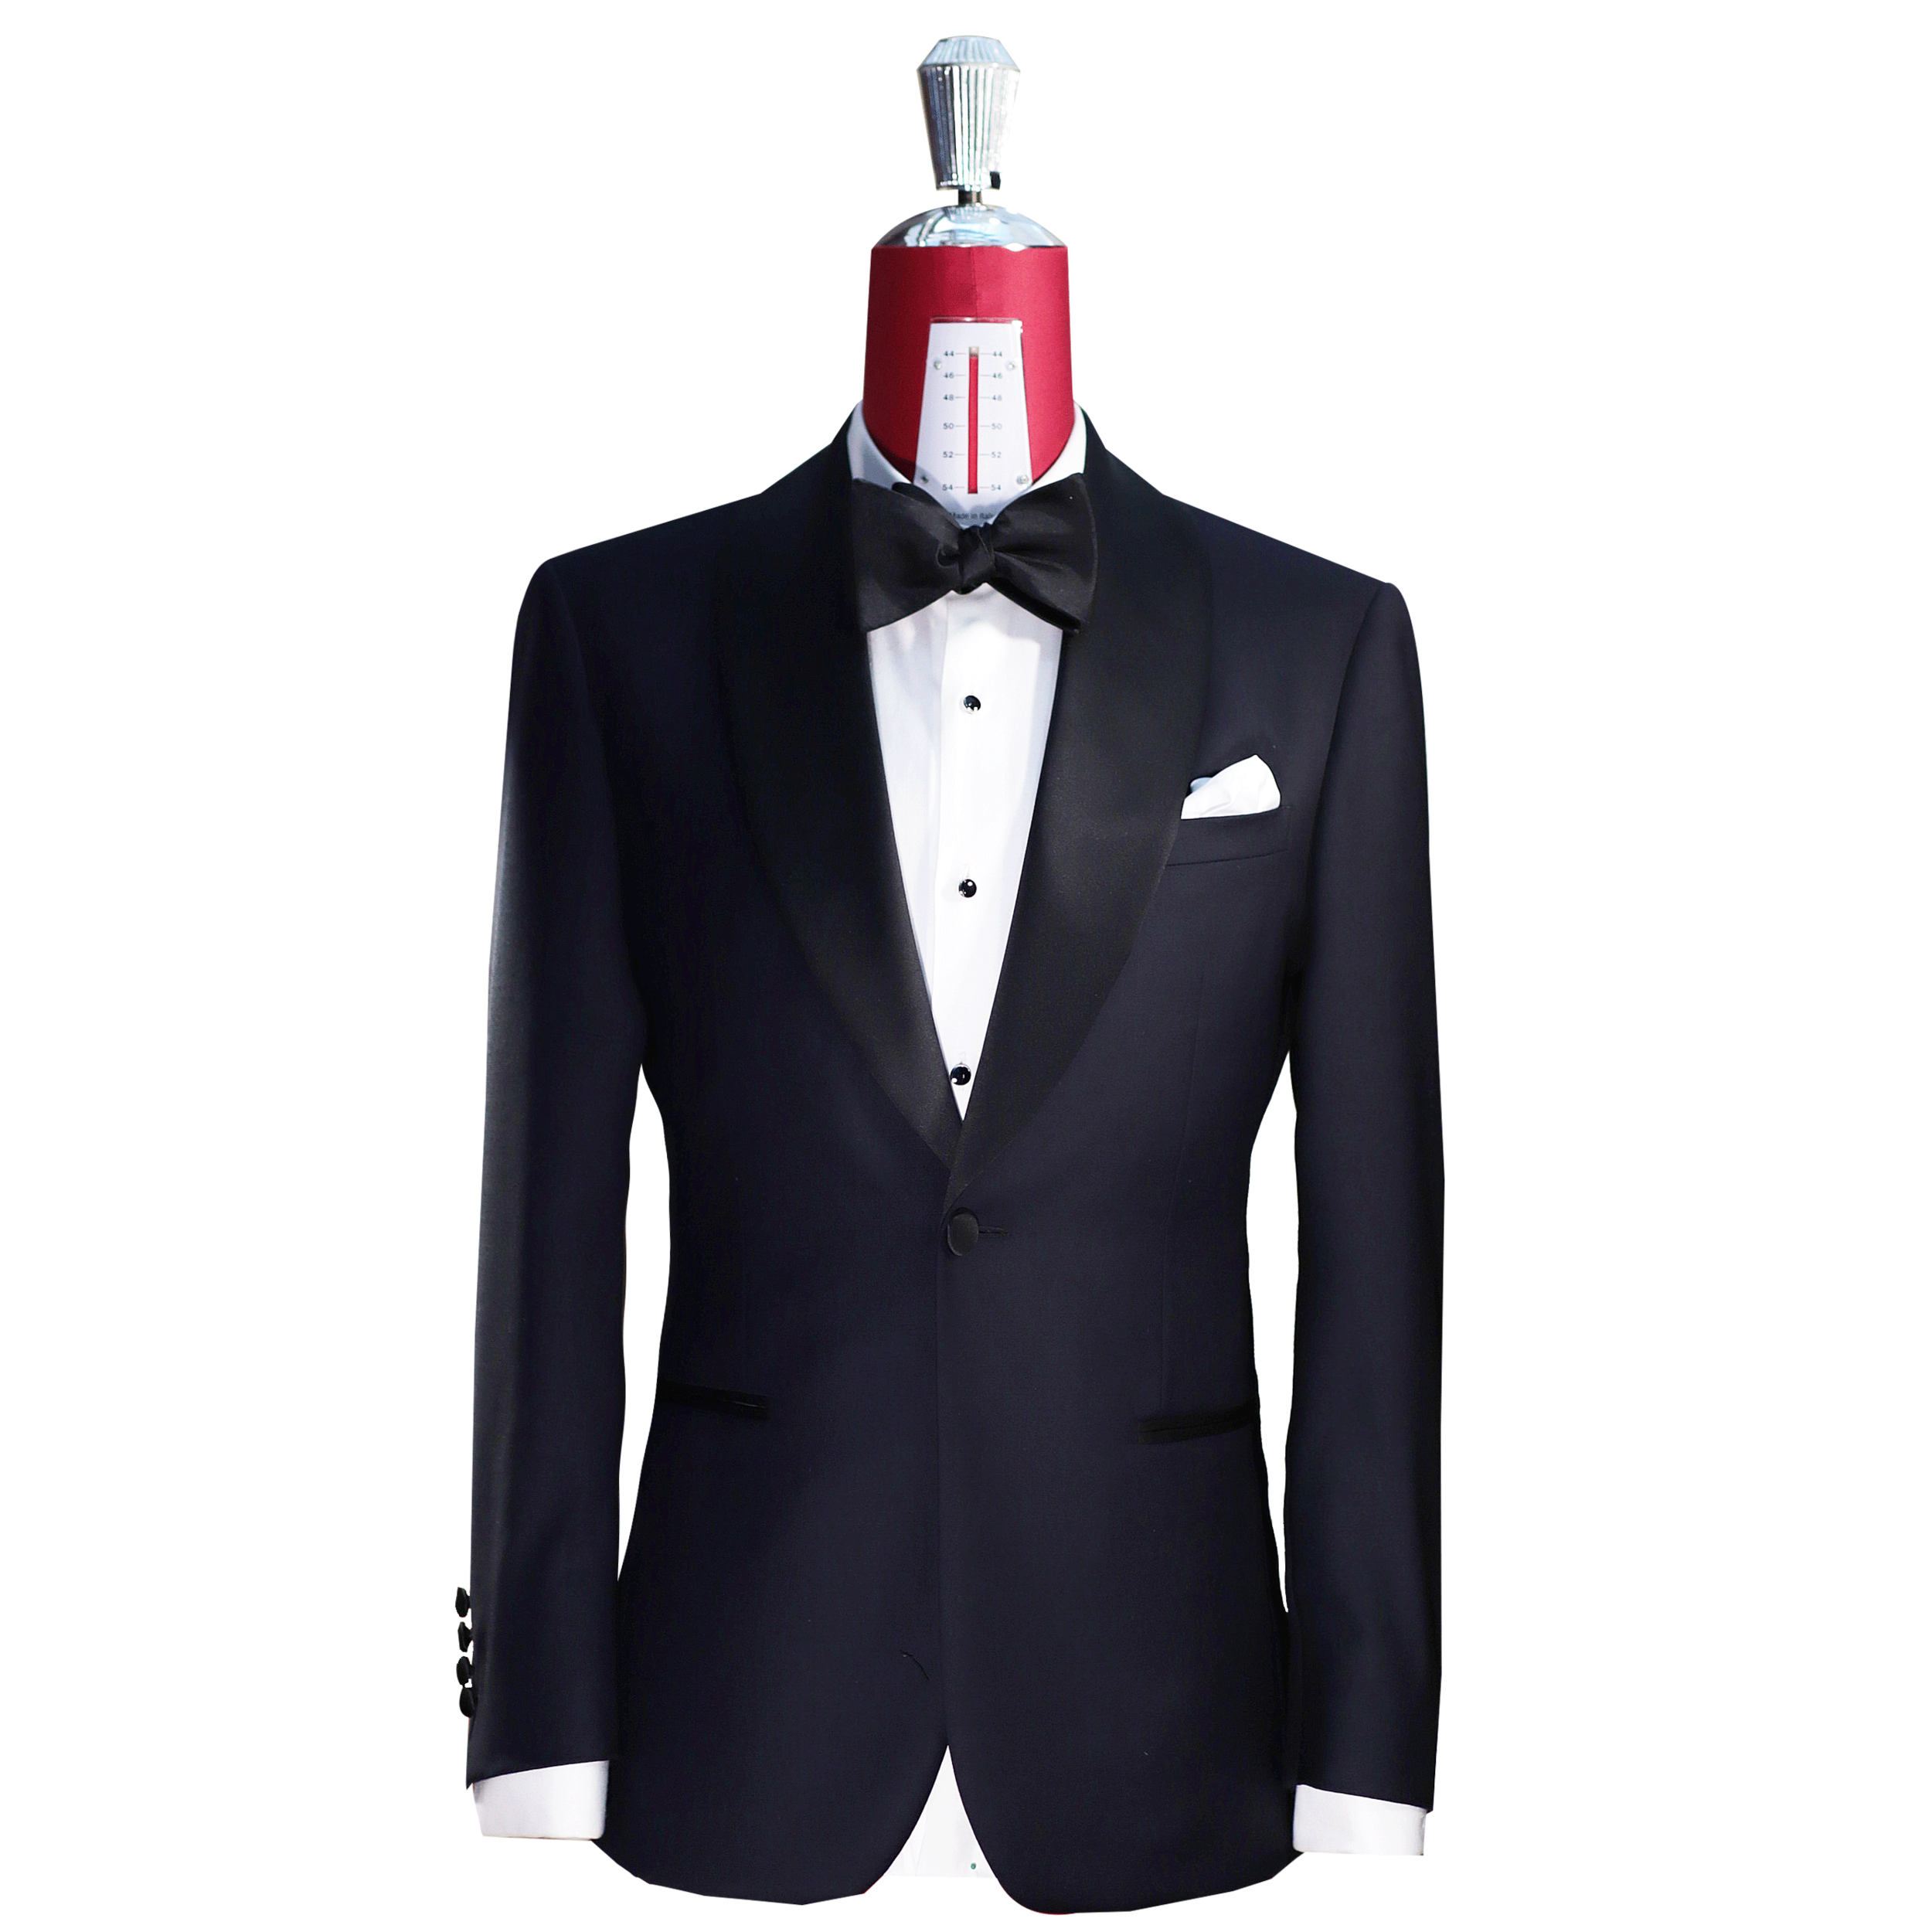 Made Suits Tuxedos Bespoke made to measure bespoke singapore tuxedo.png